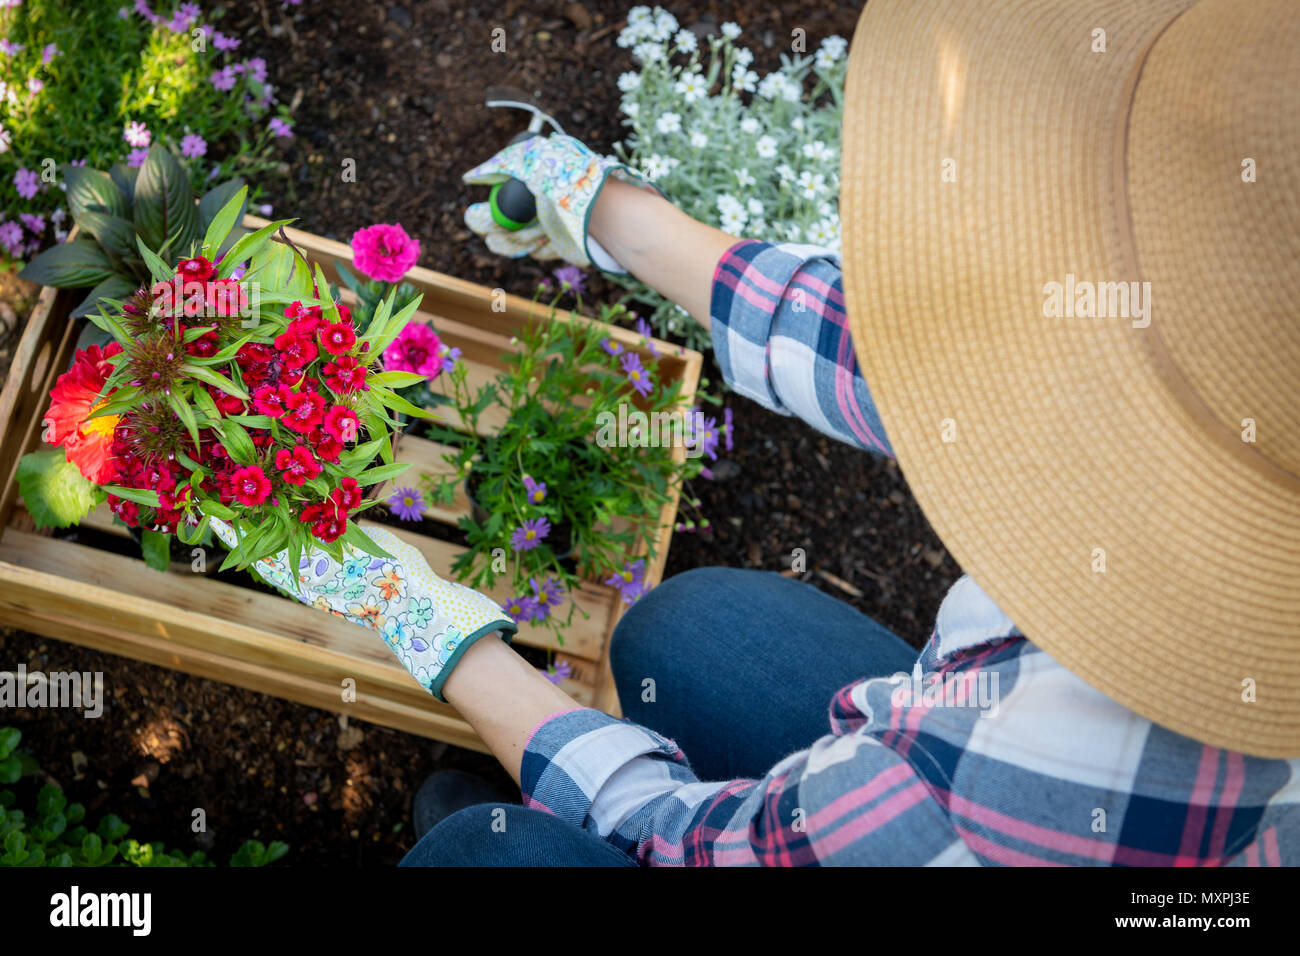 Unrecognizable female gardener planting flowers in her garden. Gardening concept. Overhead view. Stock Photo